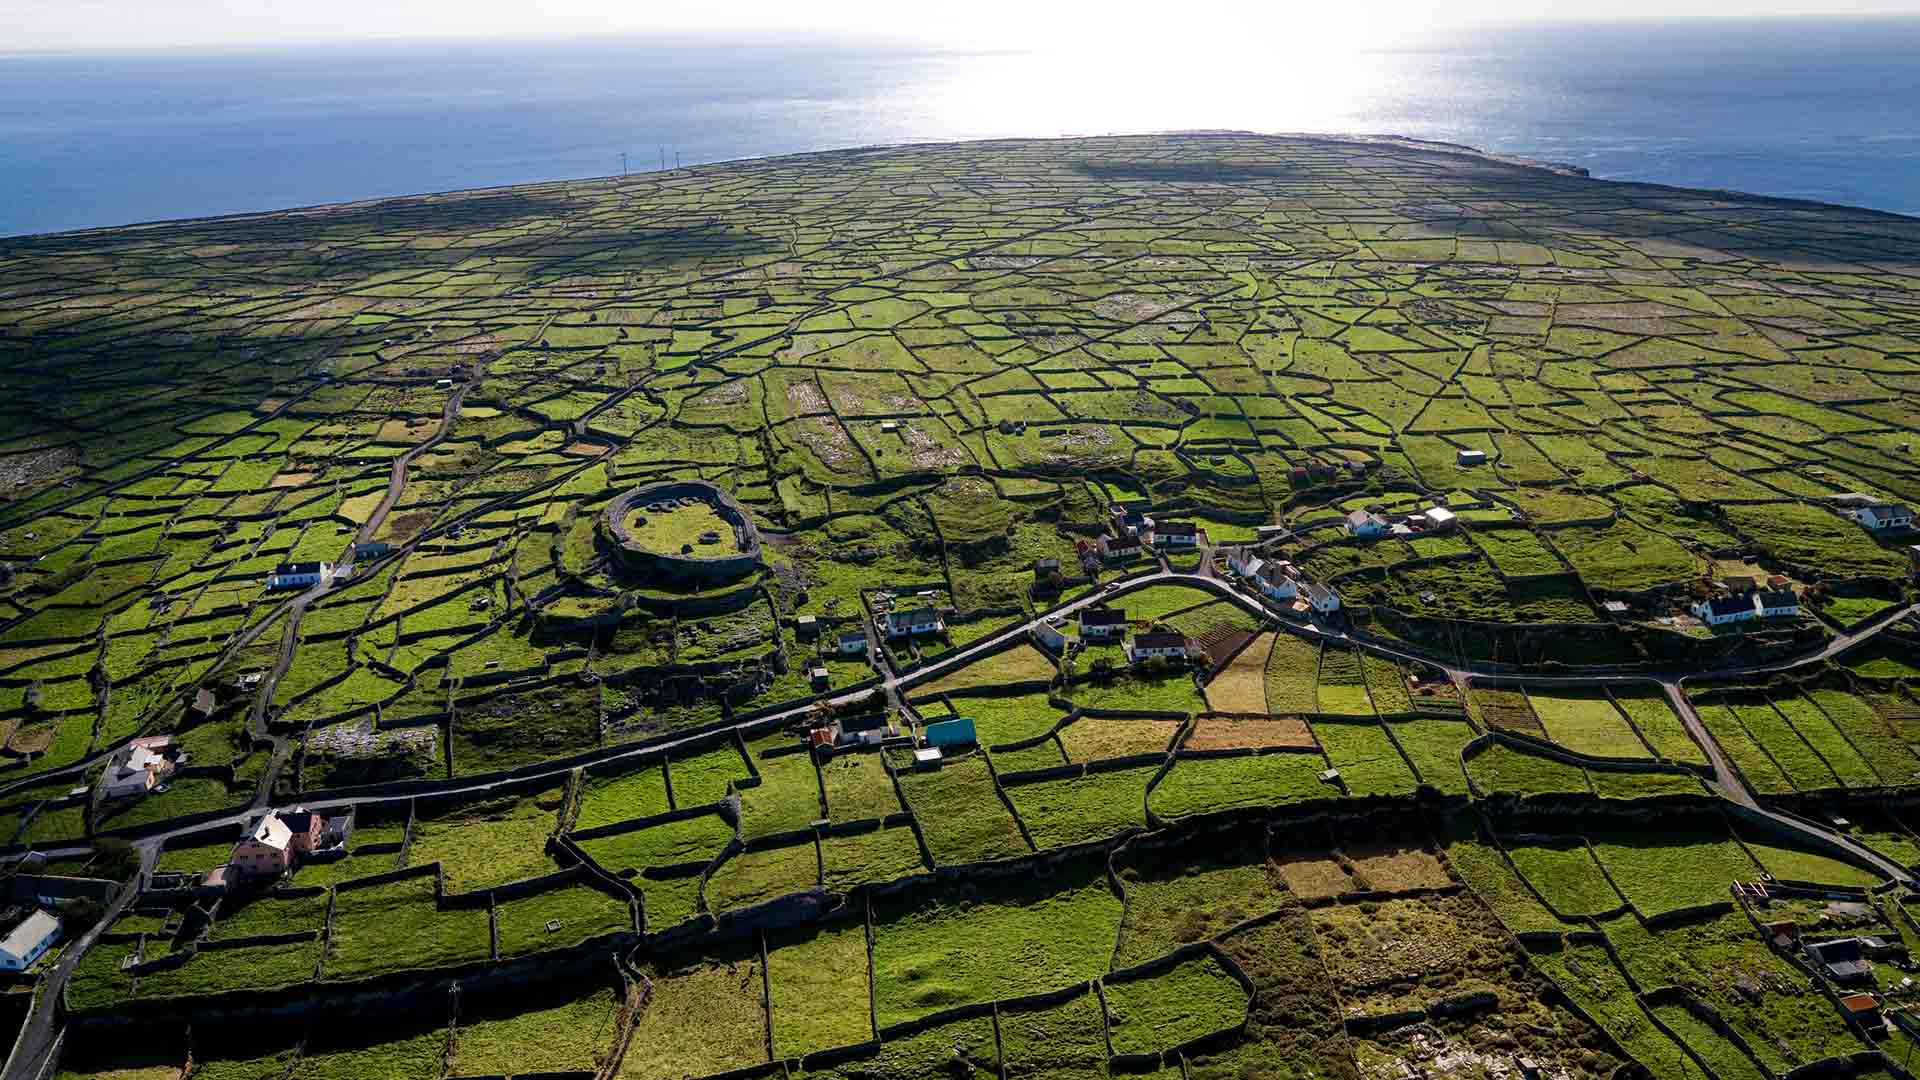 Inishmore, Aran Islands @Chris Hill - Tourism Ireland